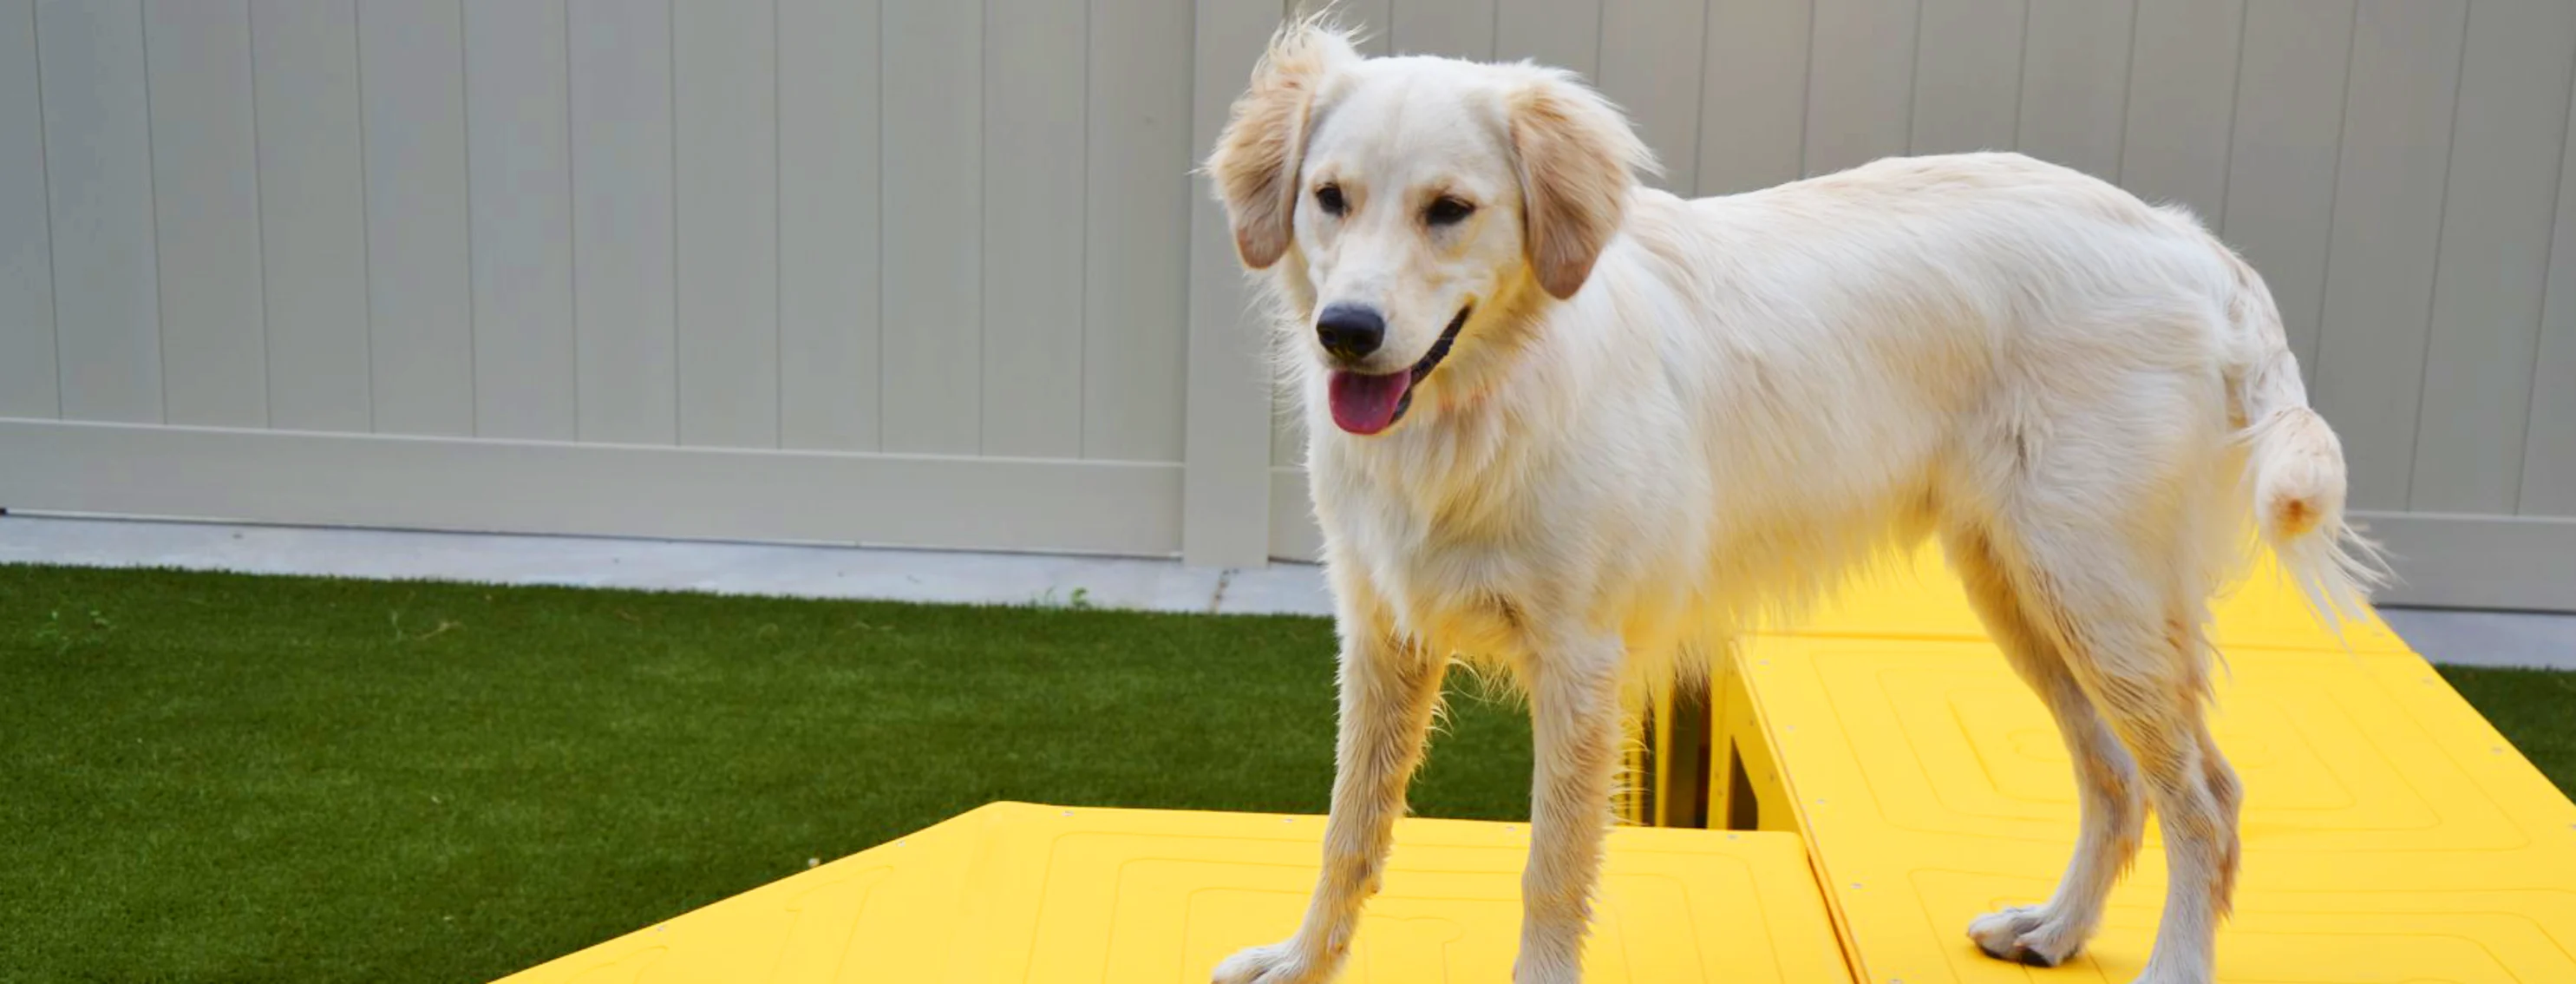 Dog on yellow play area